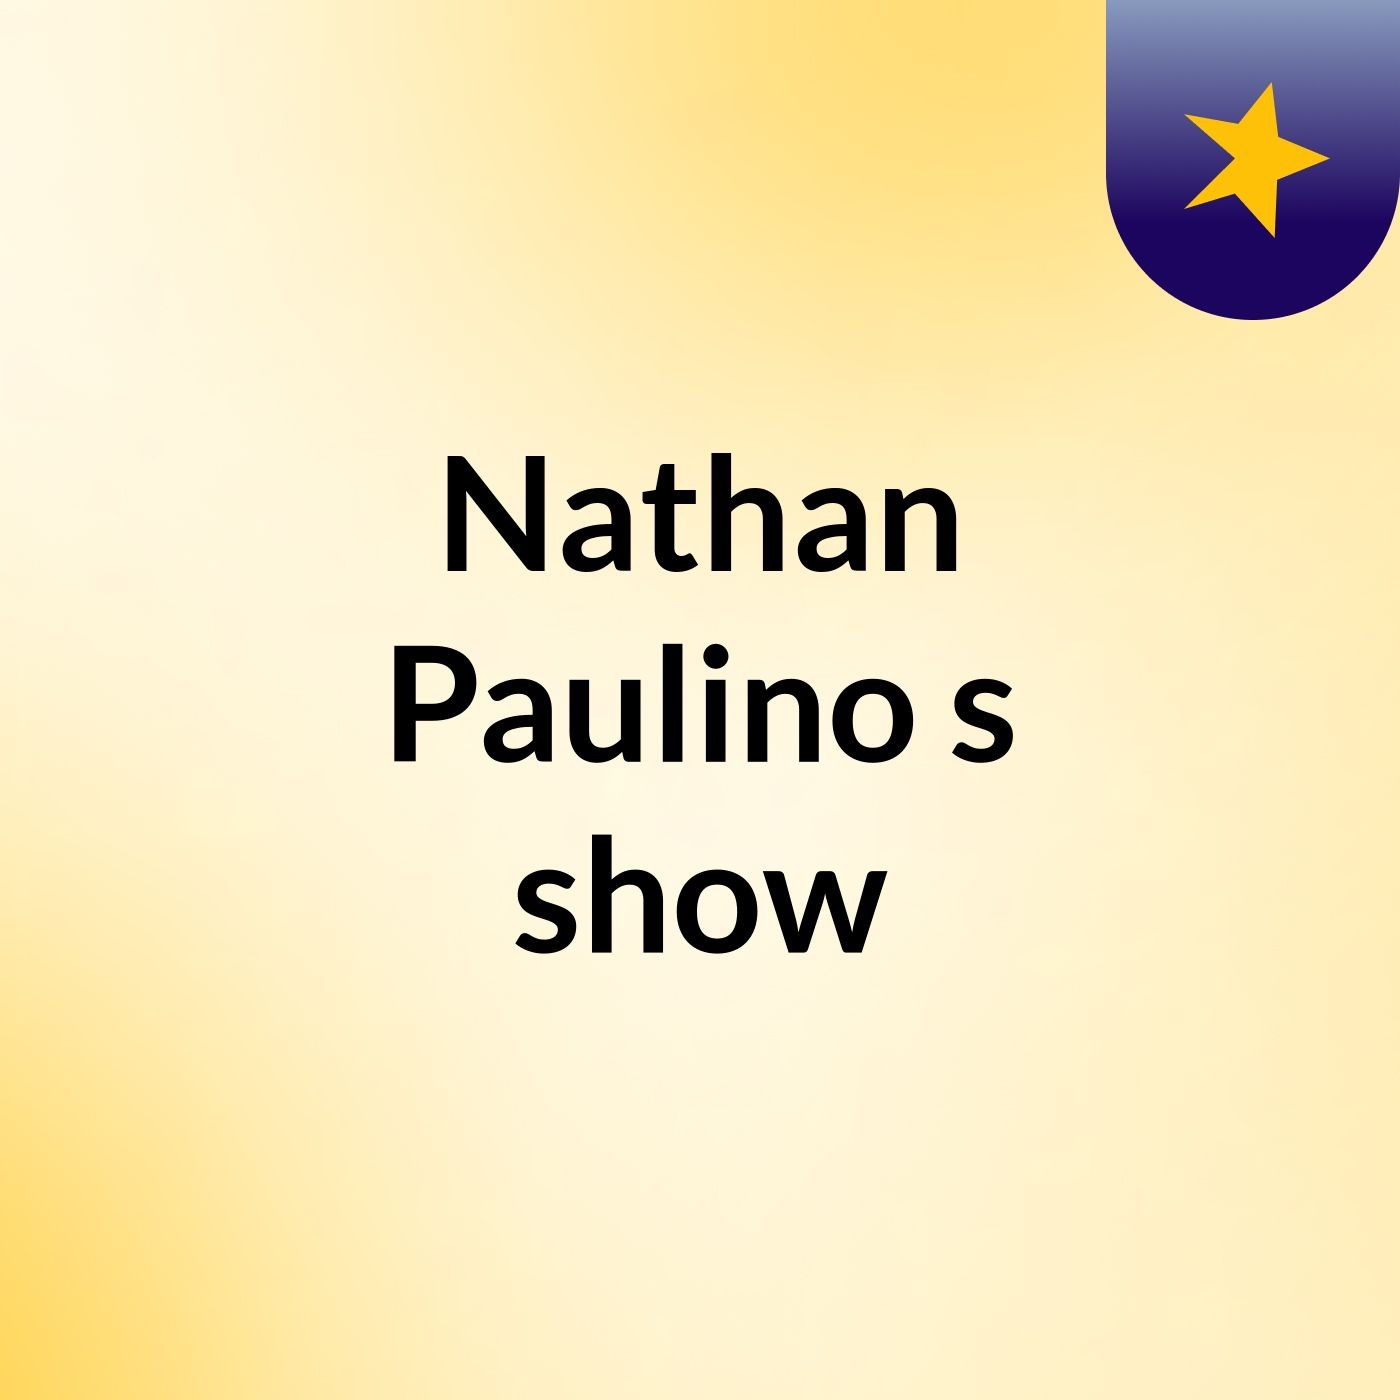 Nathan Paulino's show